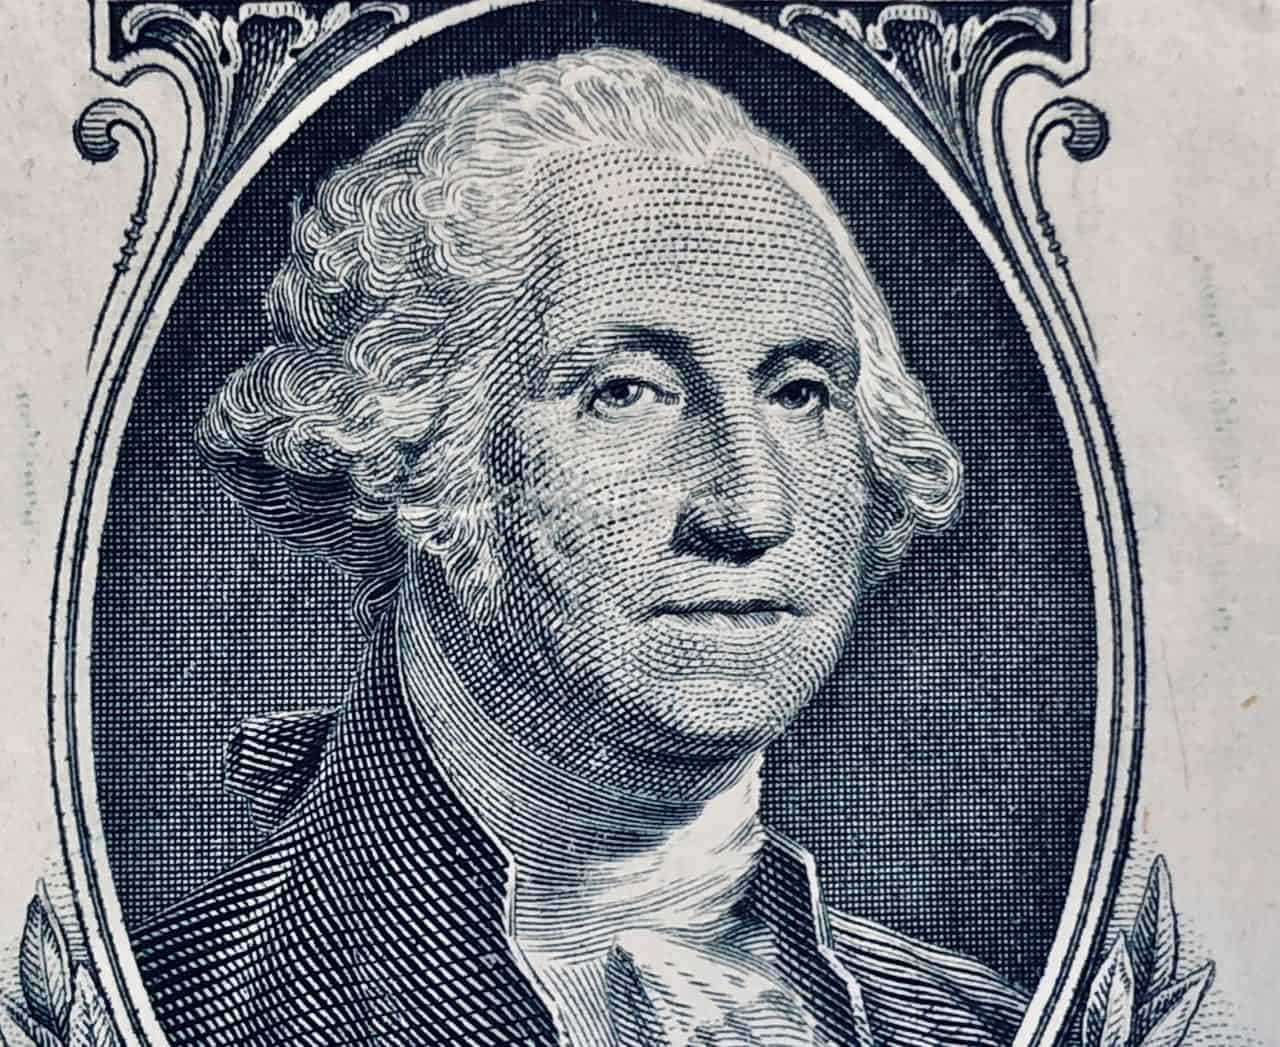 https://www.crowdfundinsider.com/wp-content/uploads/2018/12/US-Dollar-George-Washington-Money.jpg